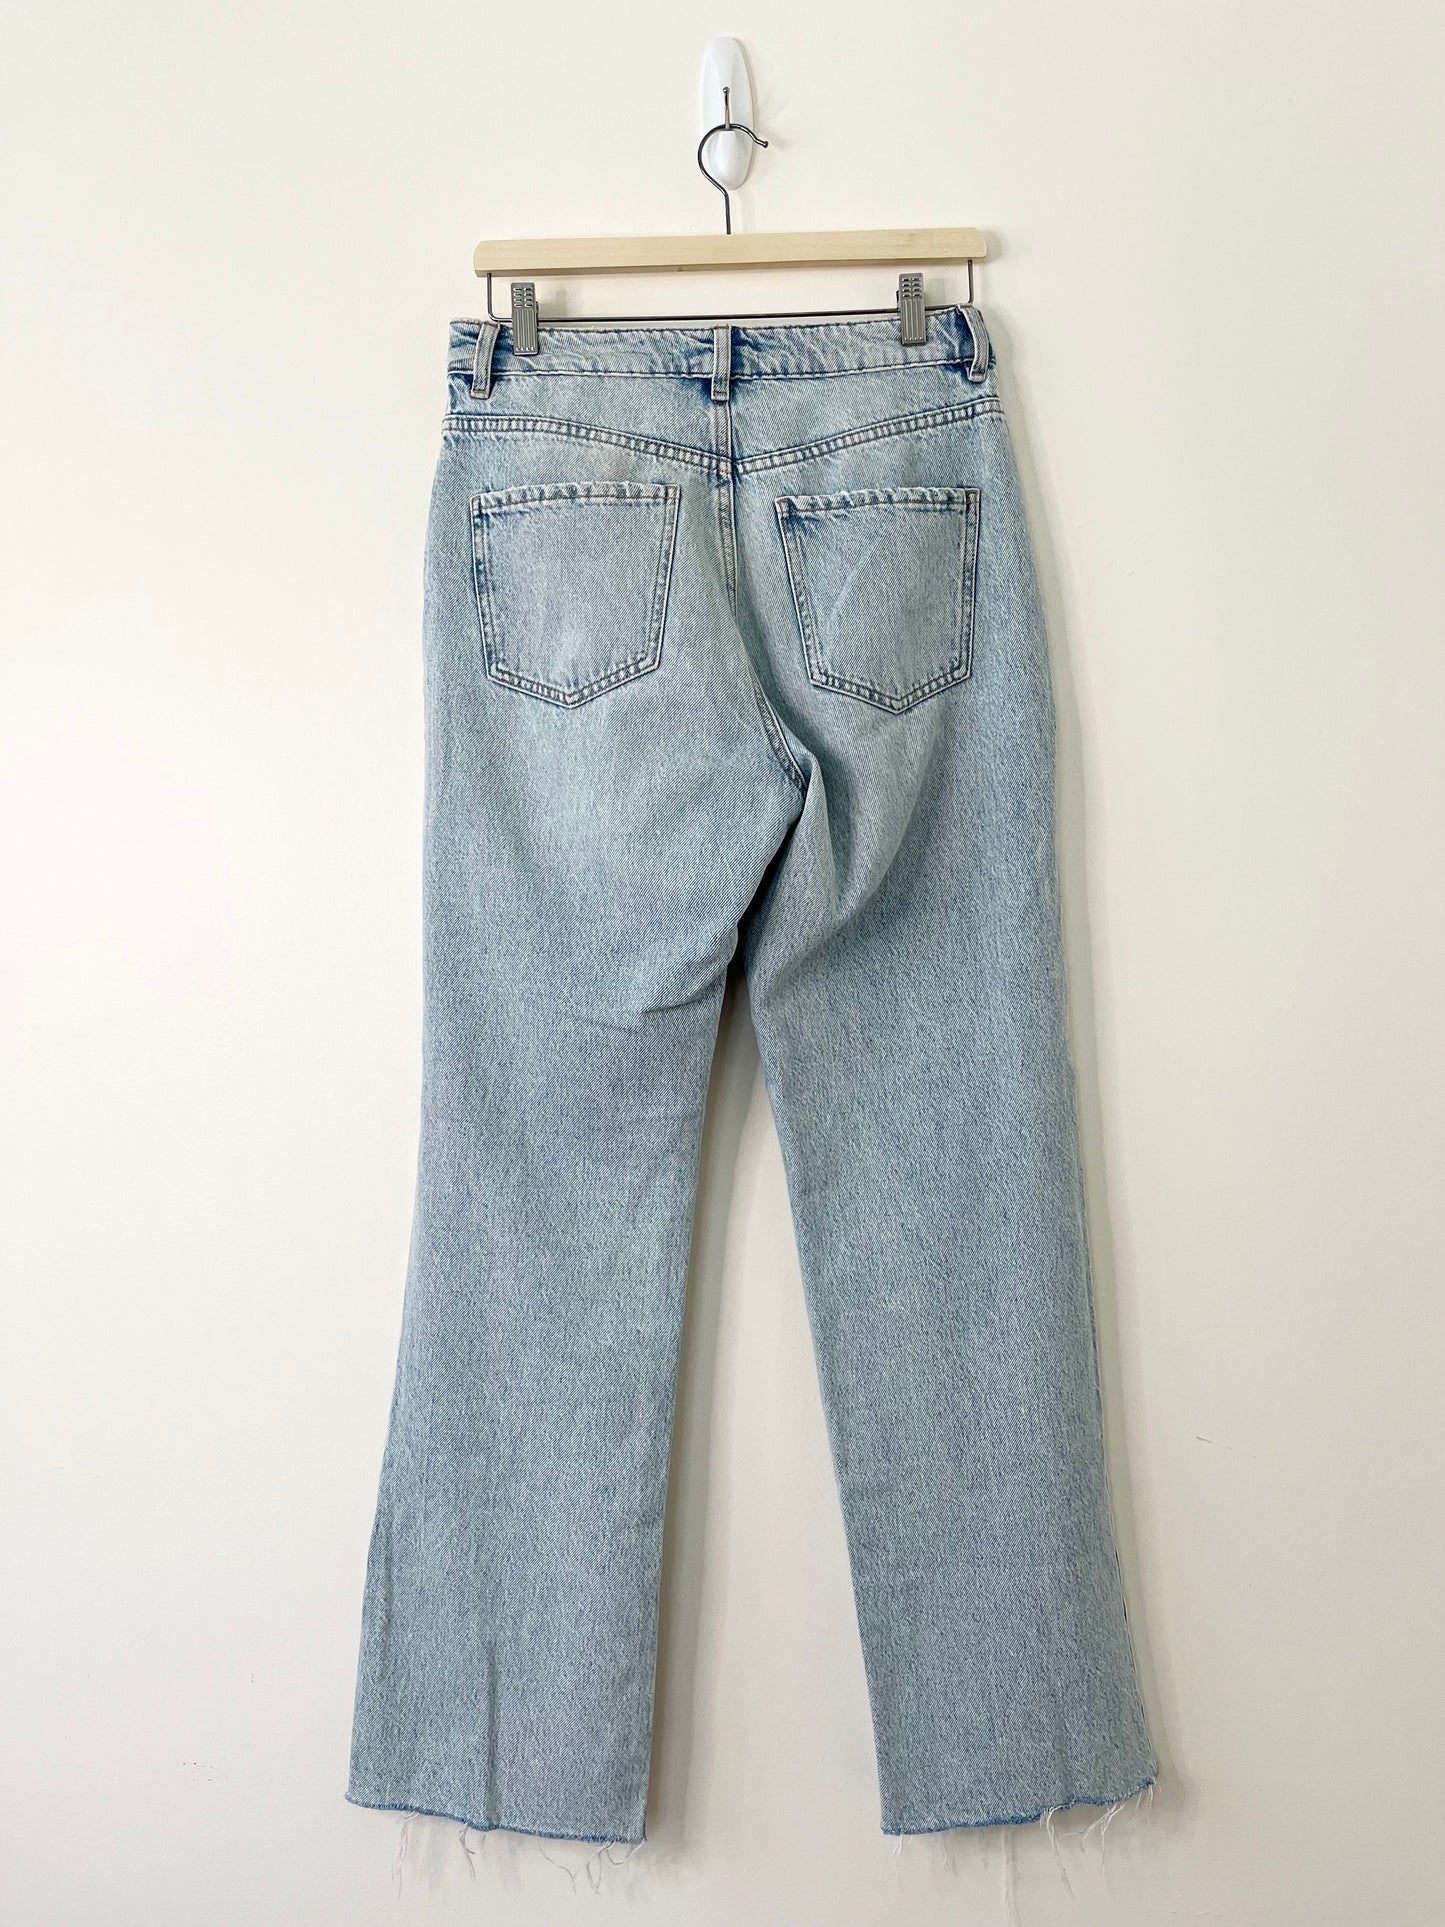 Light-Wash Distressed Jeans (15" across waist)